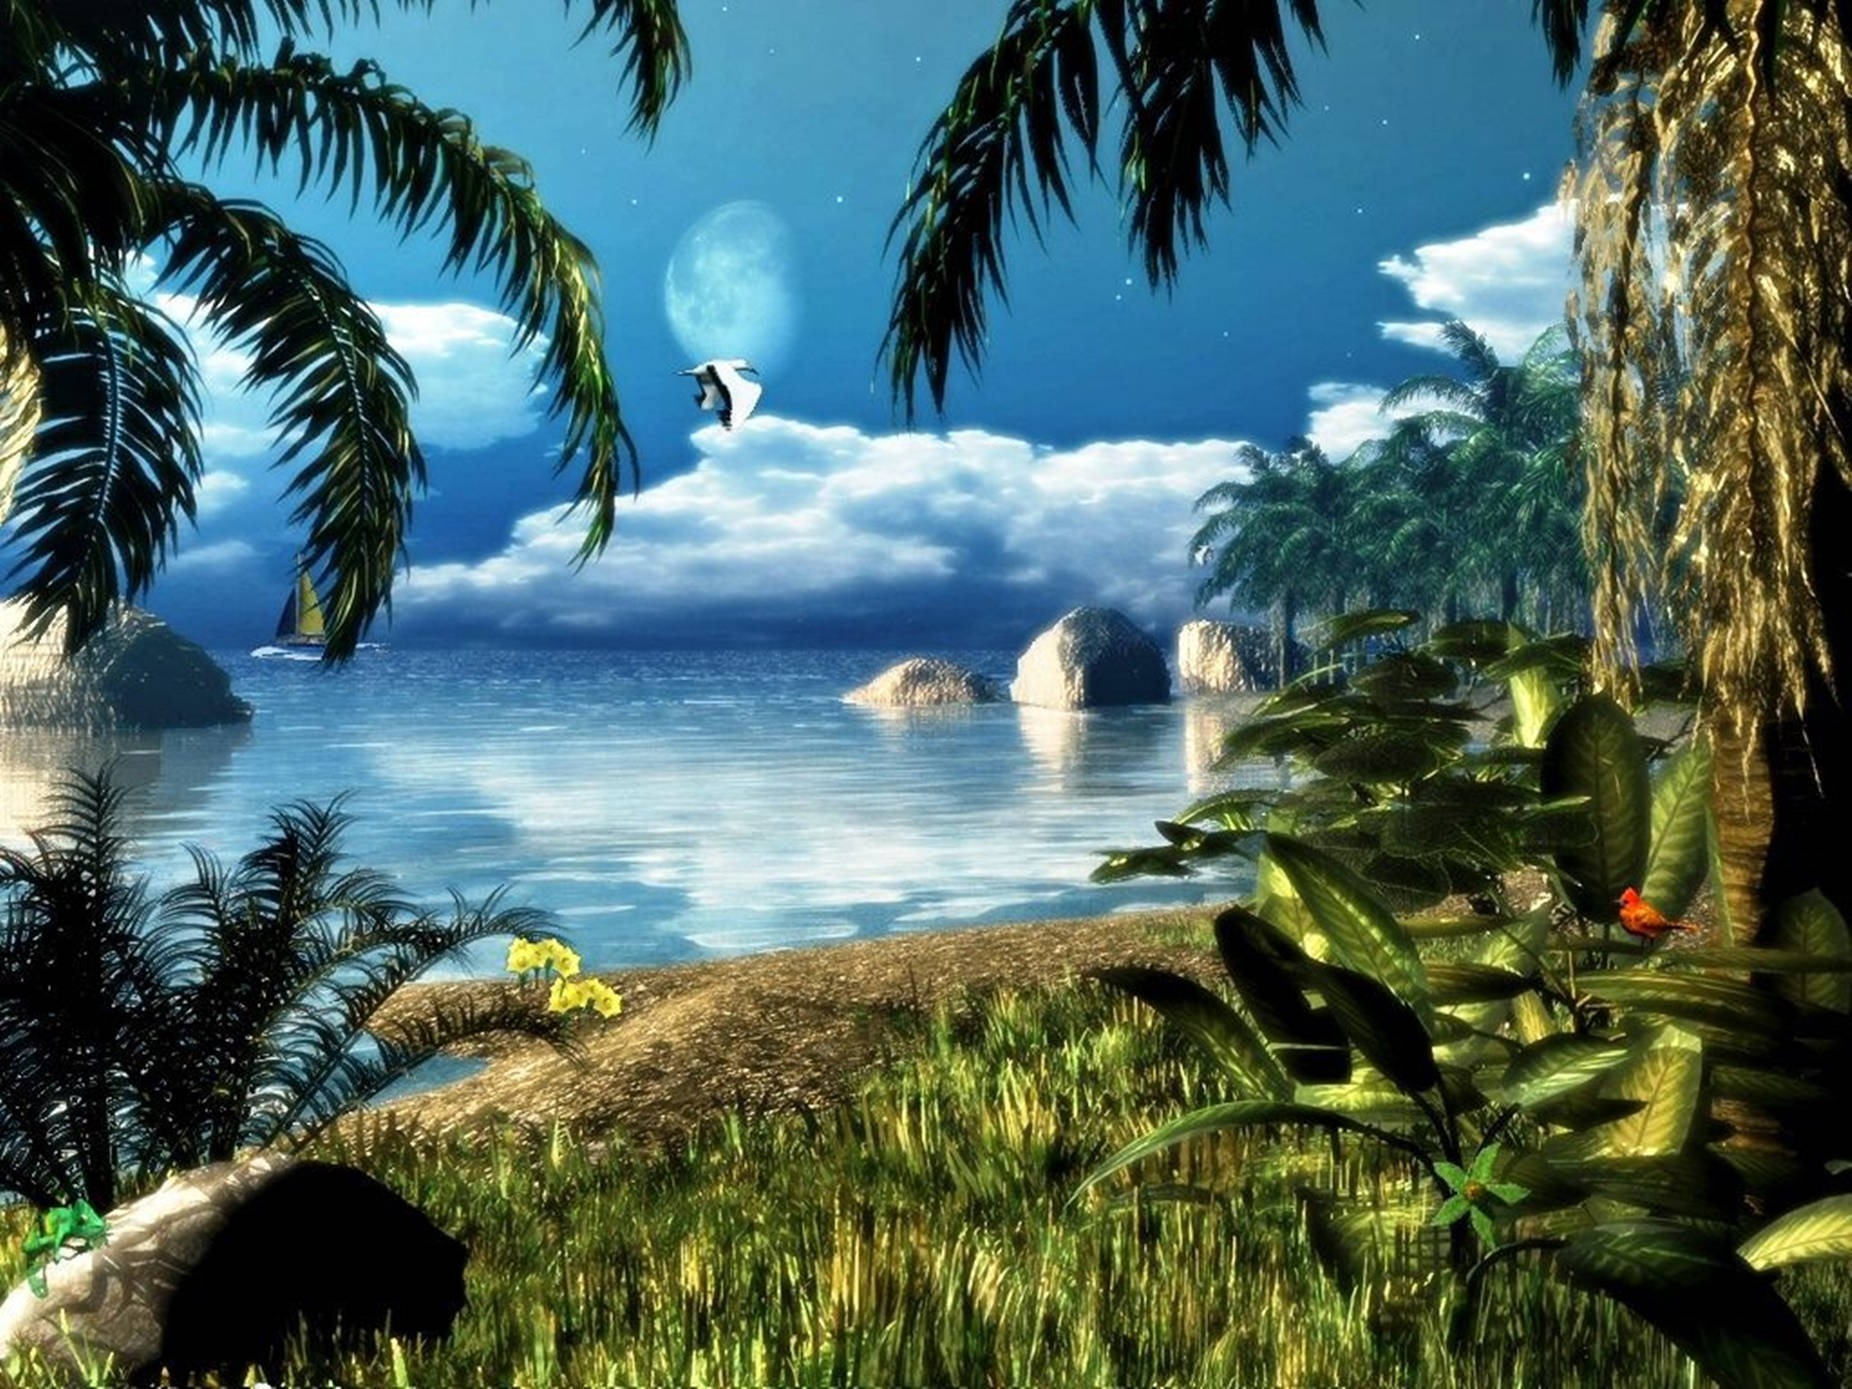 Deserted Island 3d Animation Wallpaper